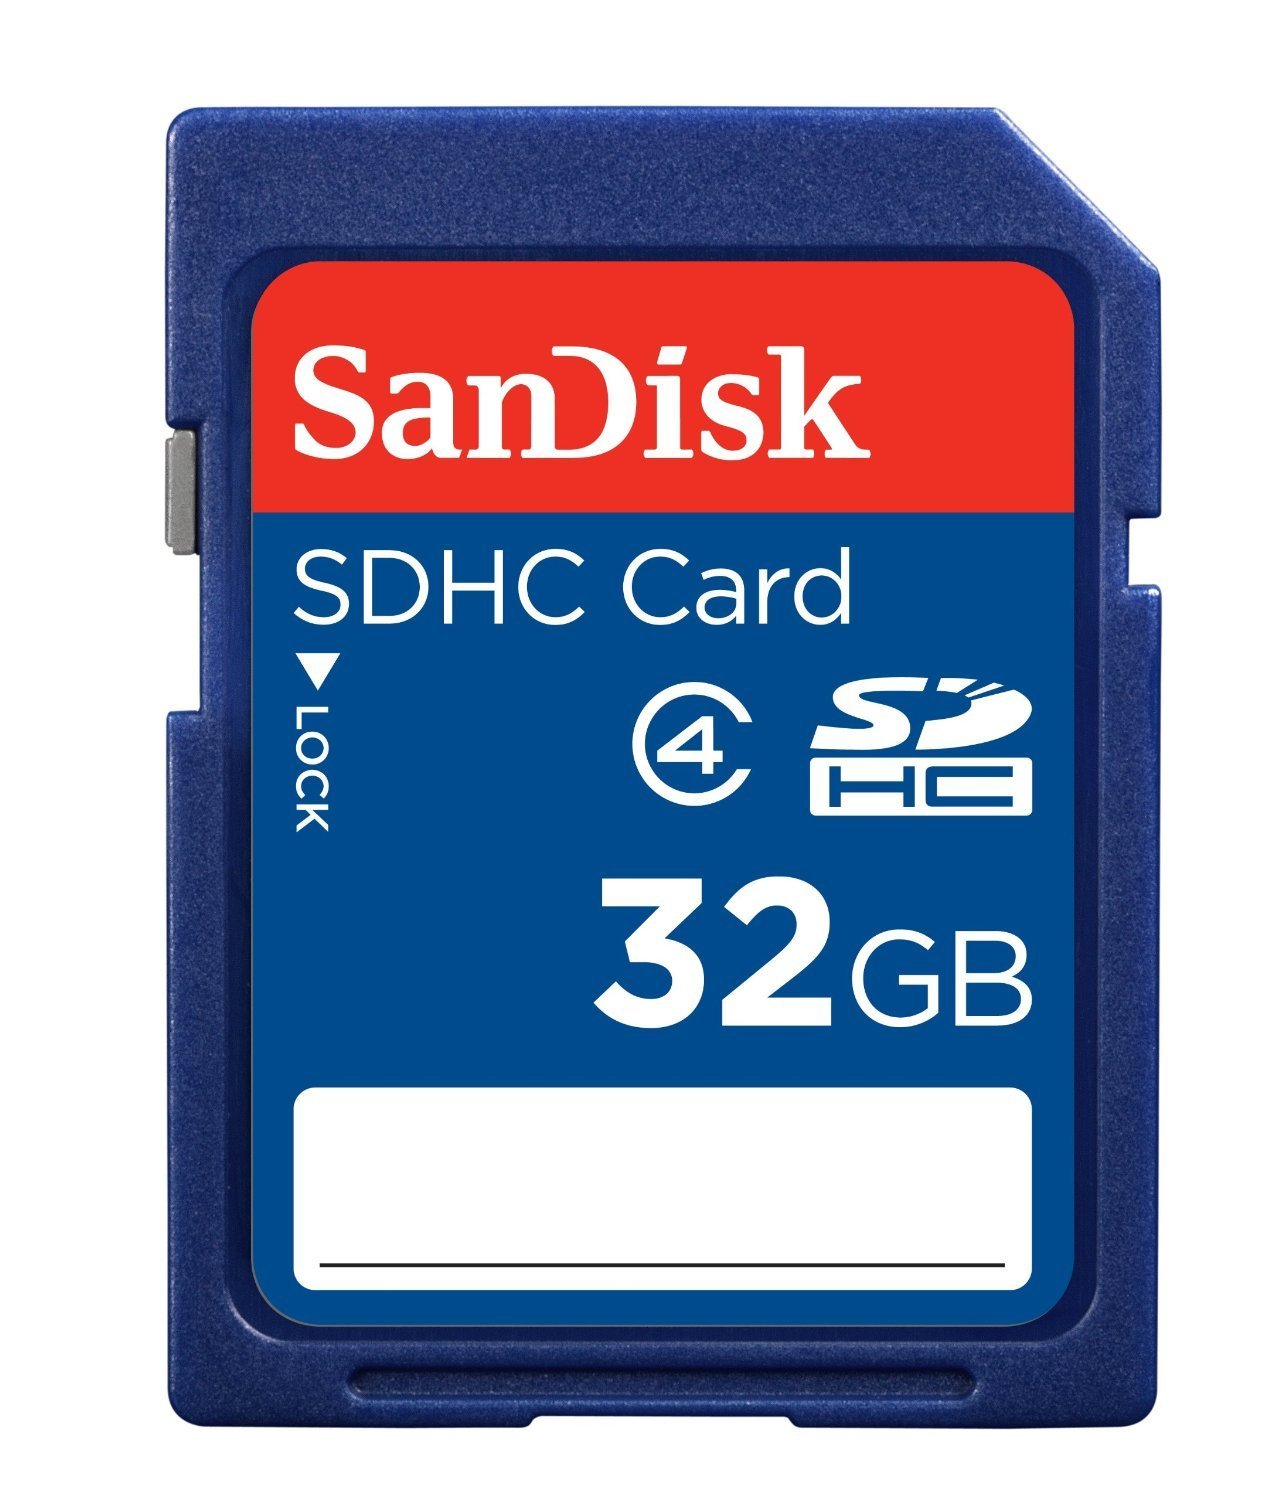 Amazon.com: SanDisk Standard - Flash memory card - 32 GB - Class 4 ...